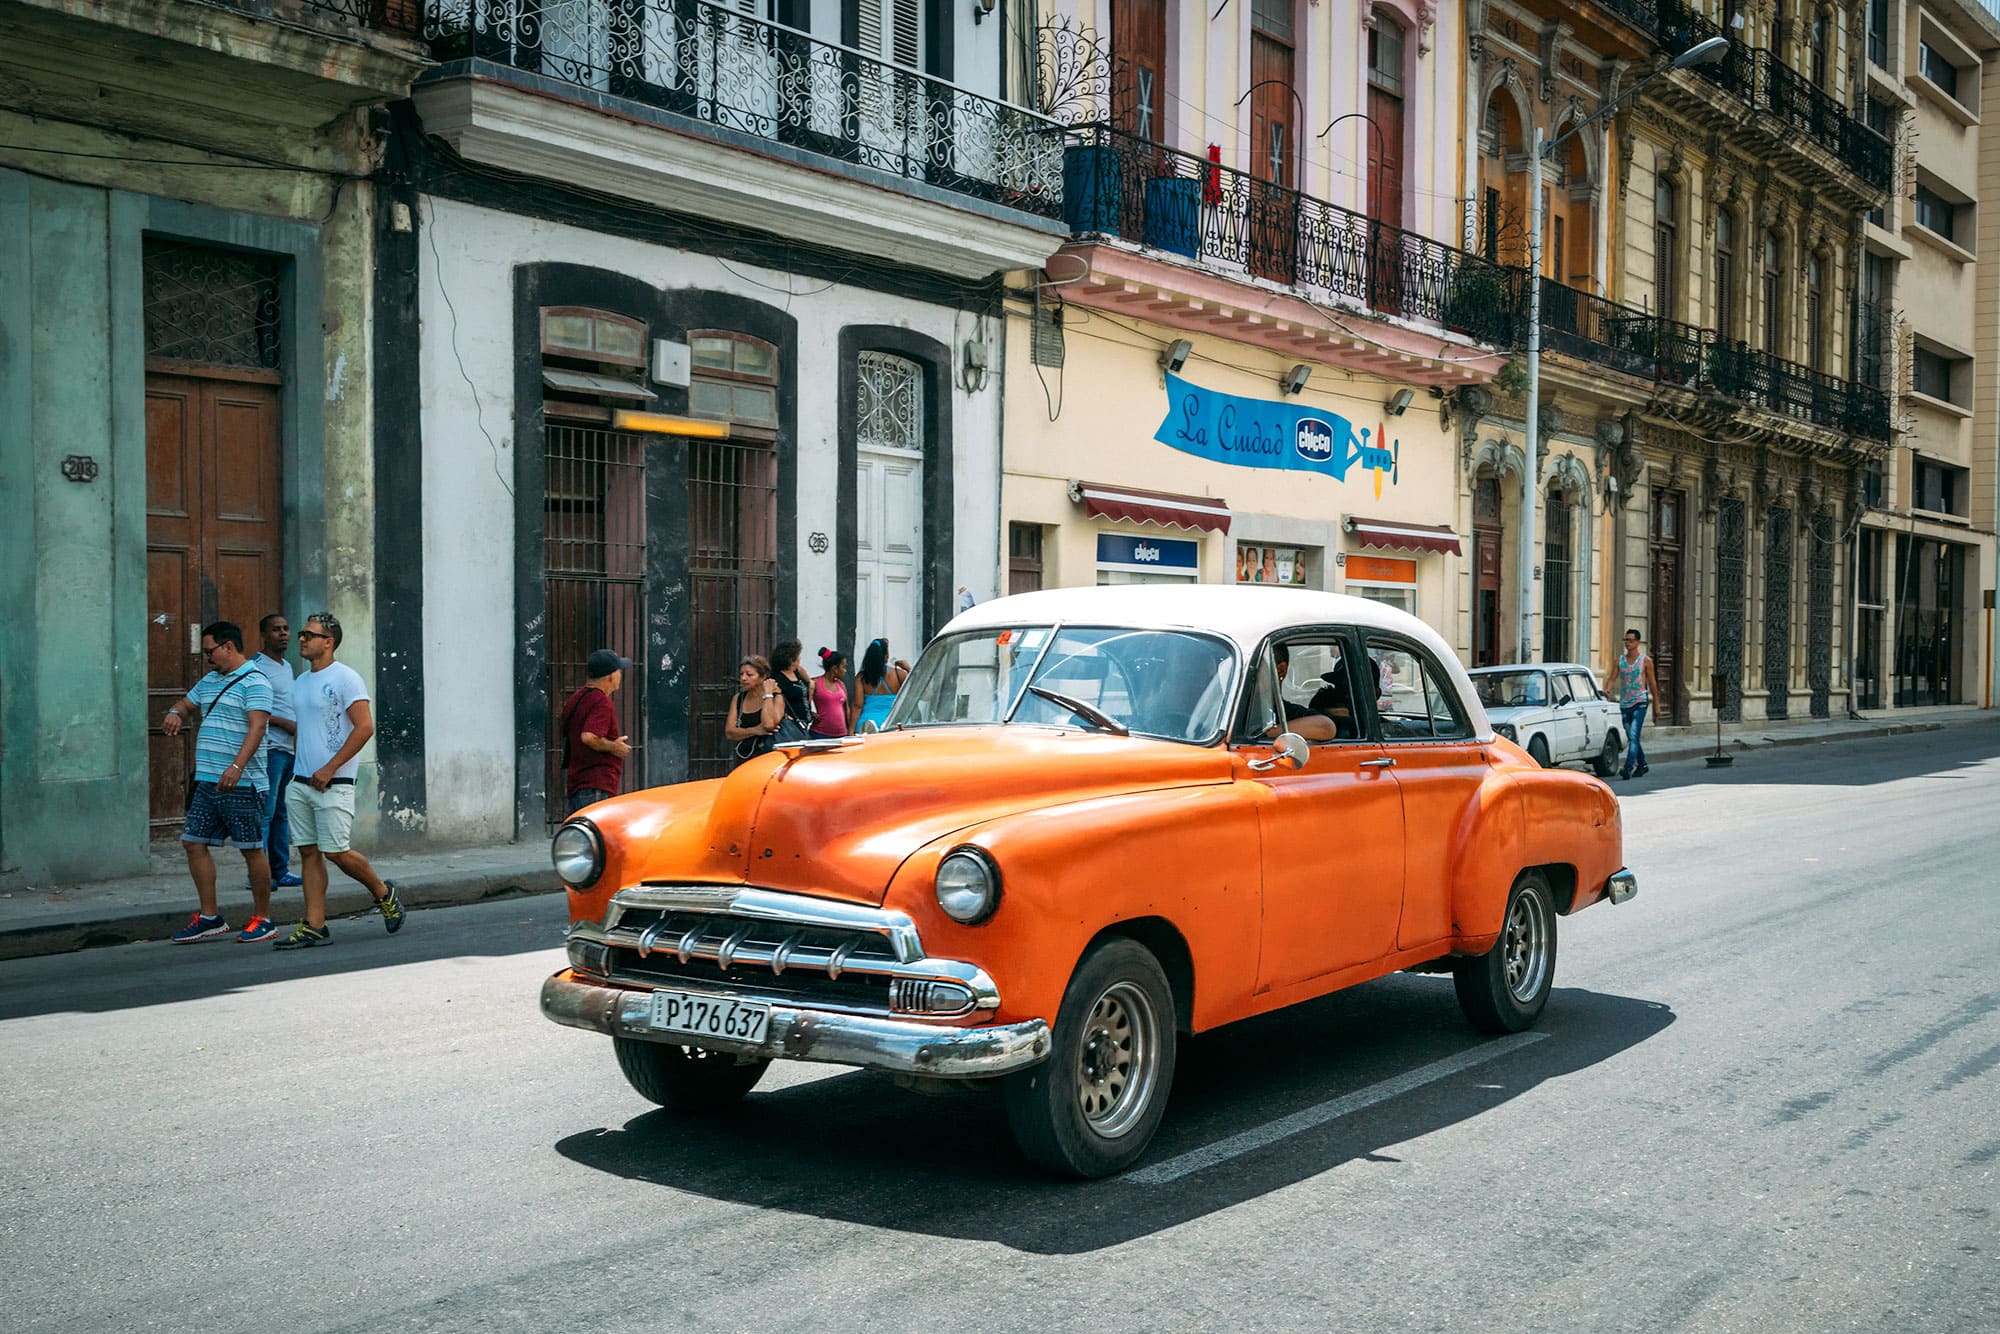 Cuba Travel Ban